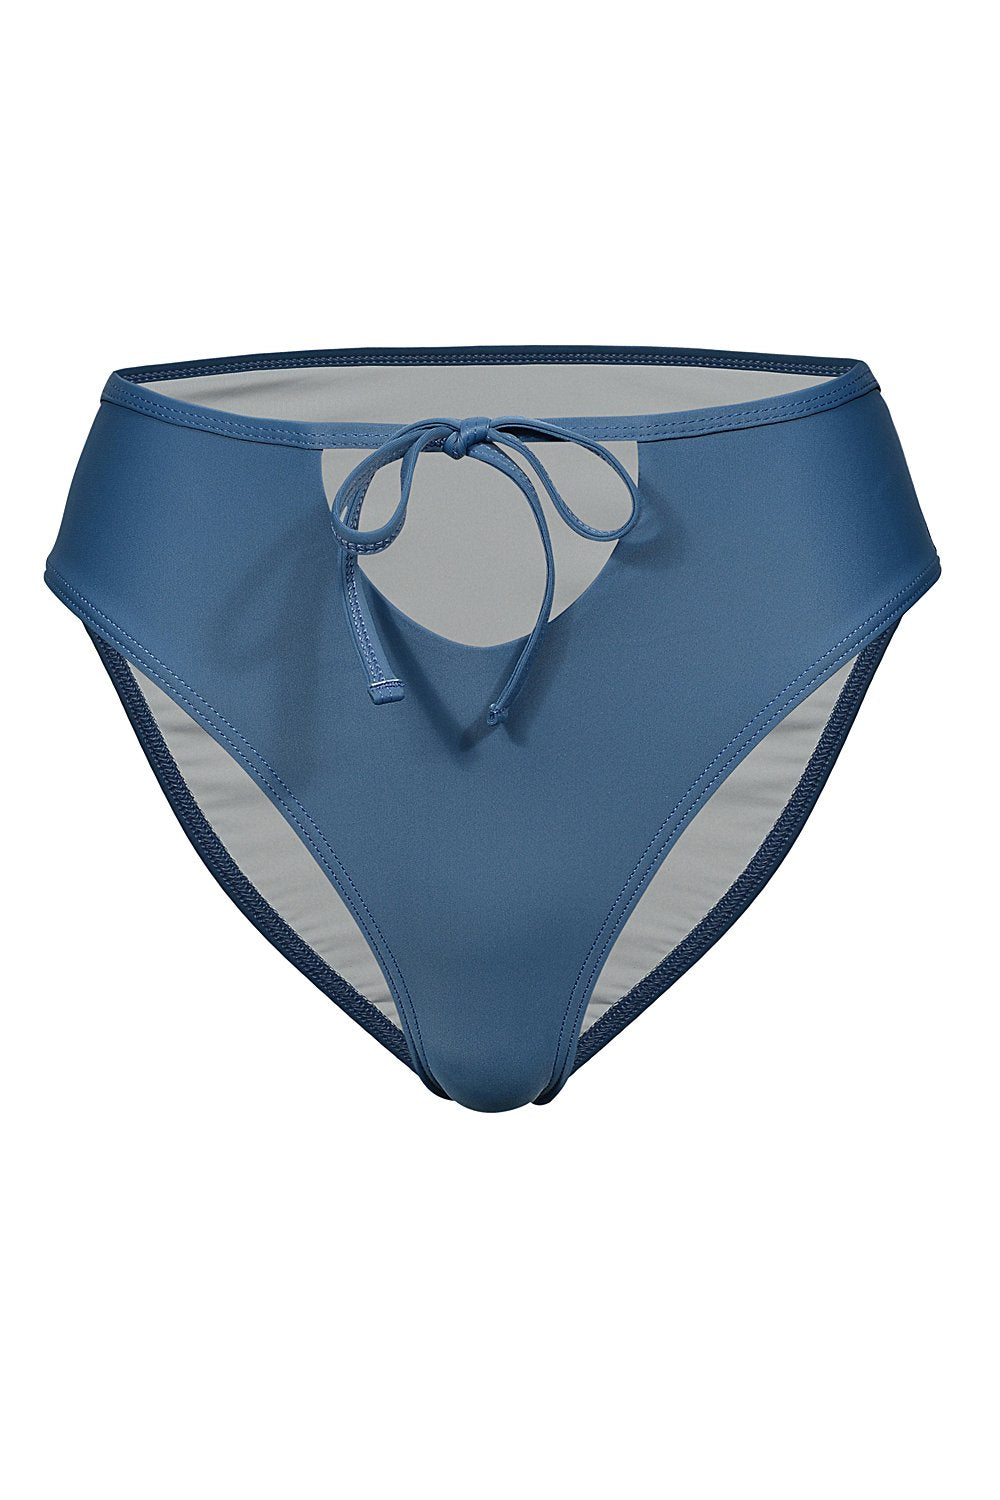 tie front bottom beach bikini in slate grey powder blue color 